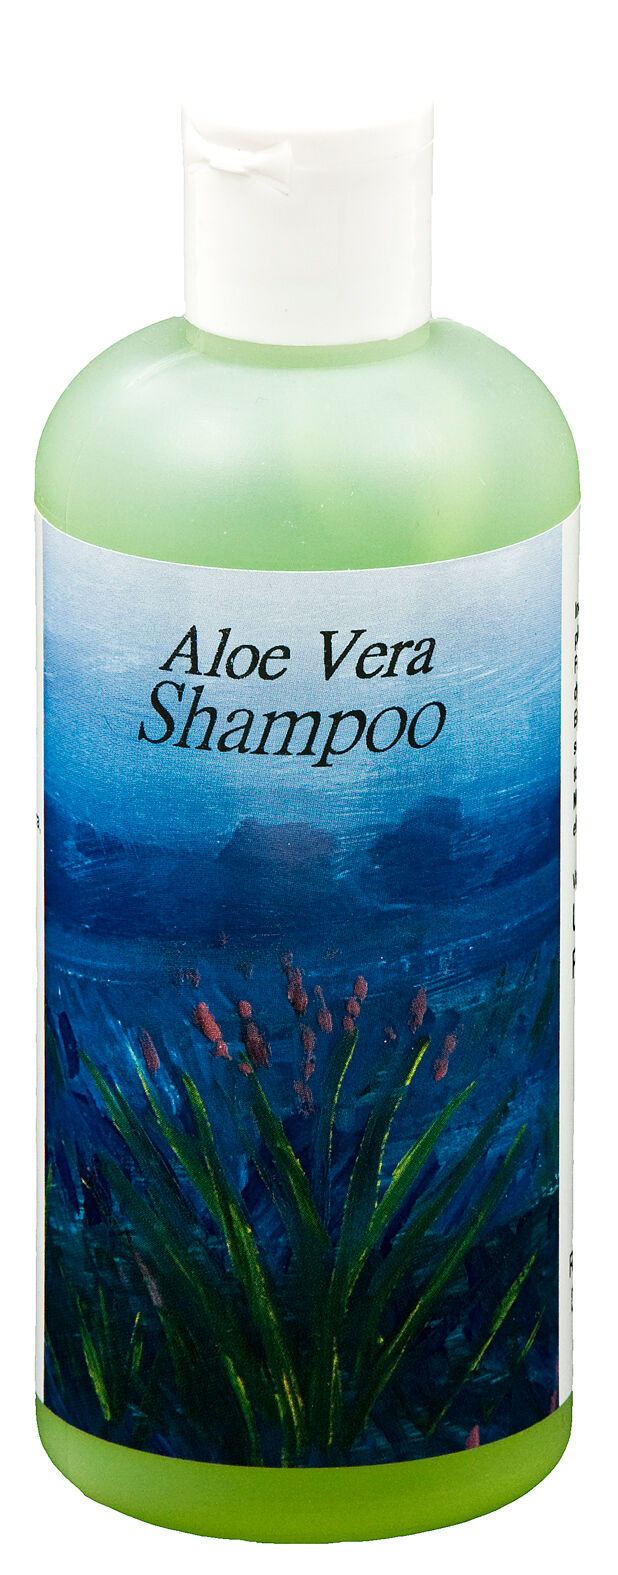 Rømer Aloe Vera Shampoo - 1 Liter